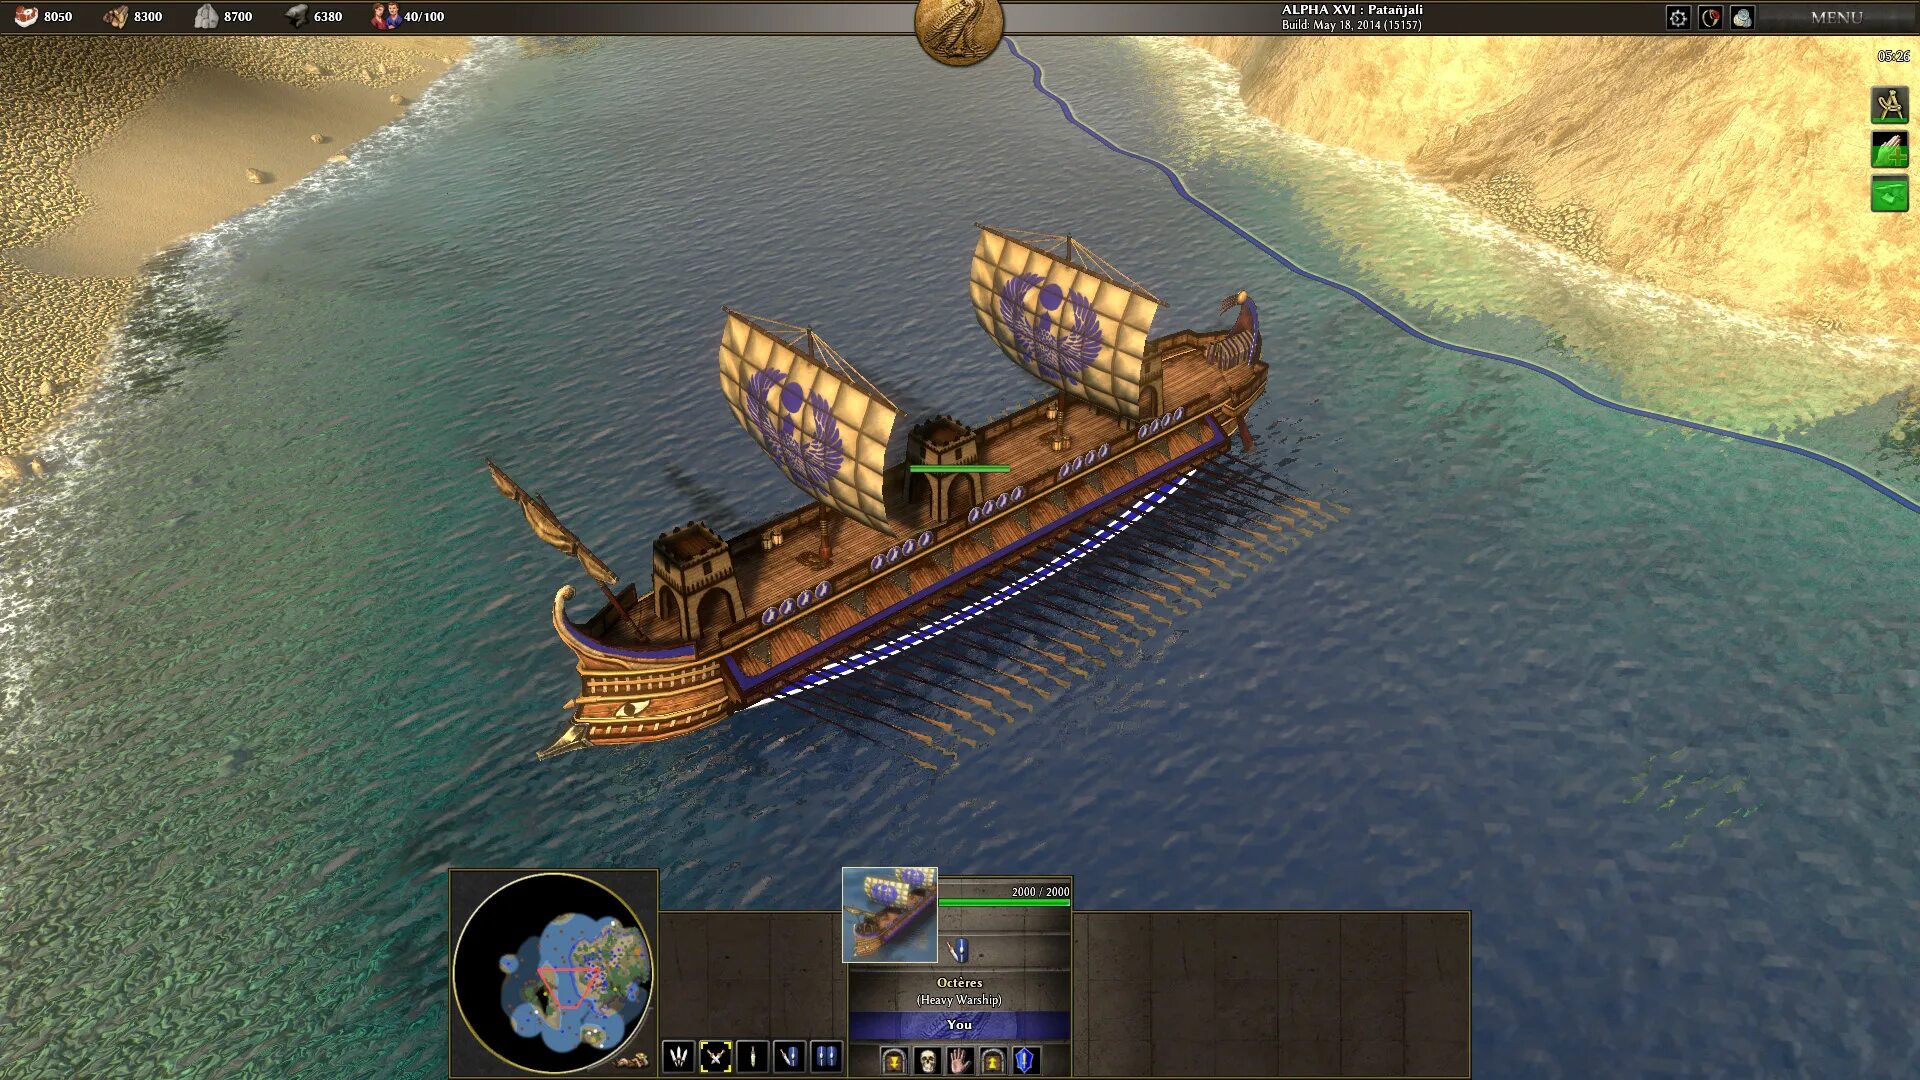 Птолемей судно где. Ptolemy 3 судно. 0 A.D. Empires Ascendant. Судно Птолемей 2. Птолемей судно.